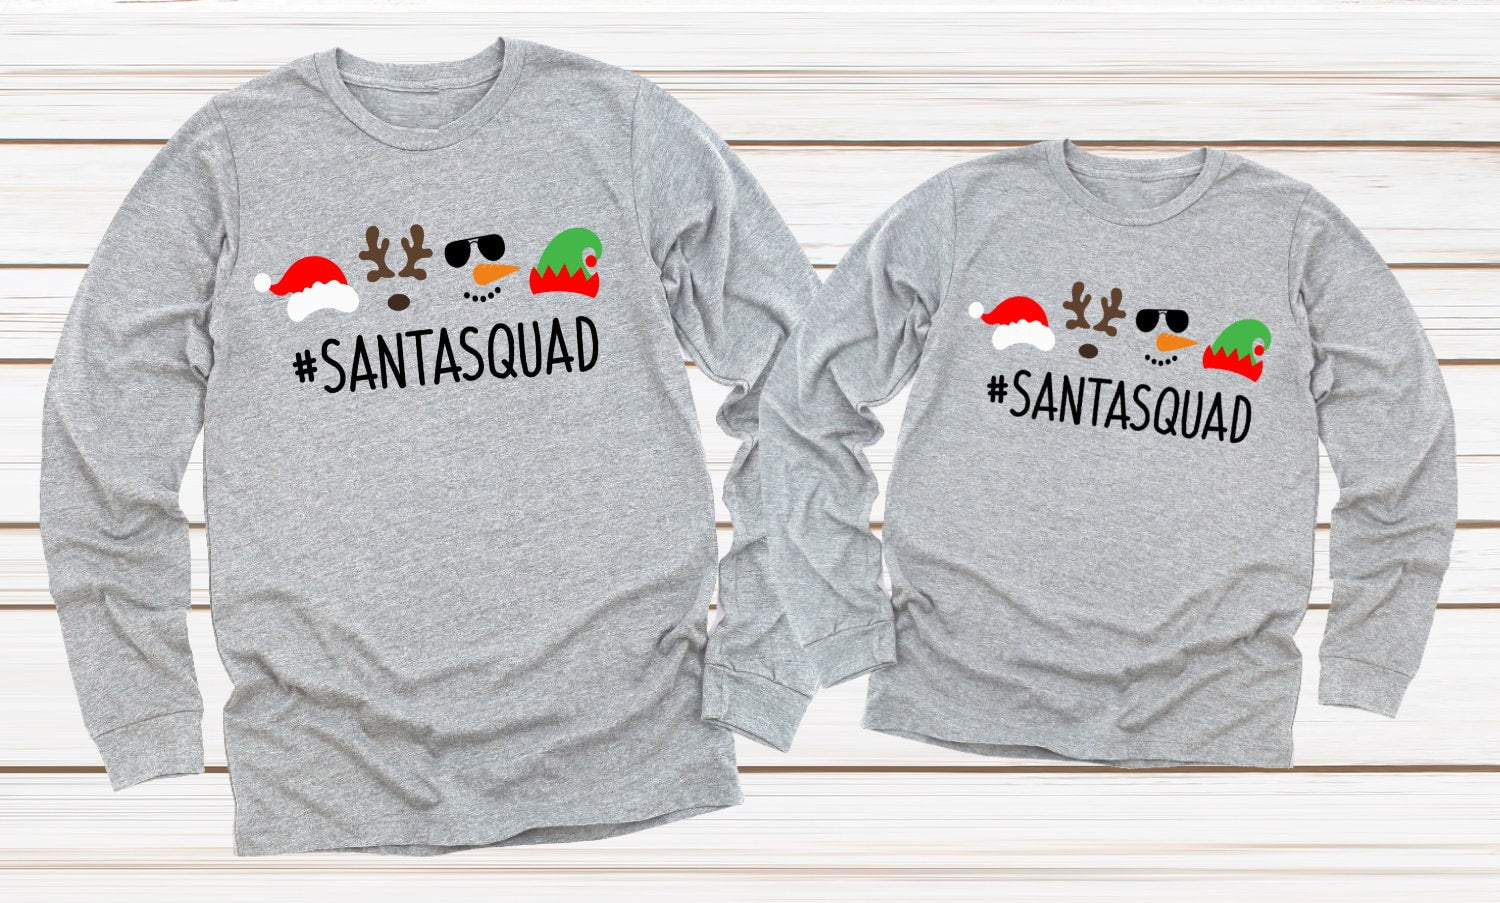 Santa Squad Christmas Crew Family Shirts Adult Kids Toddler Long or Short Sleeve Shirt